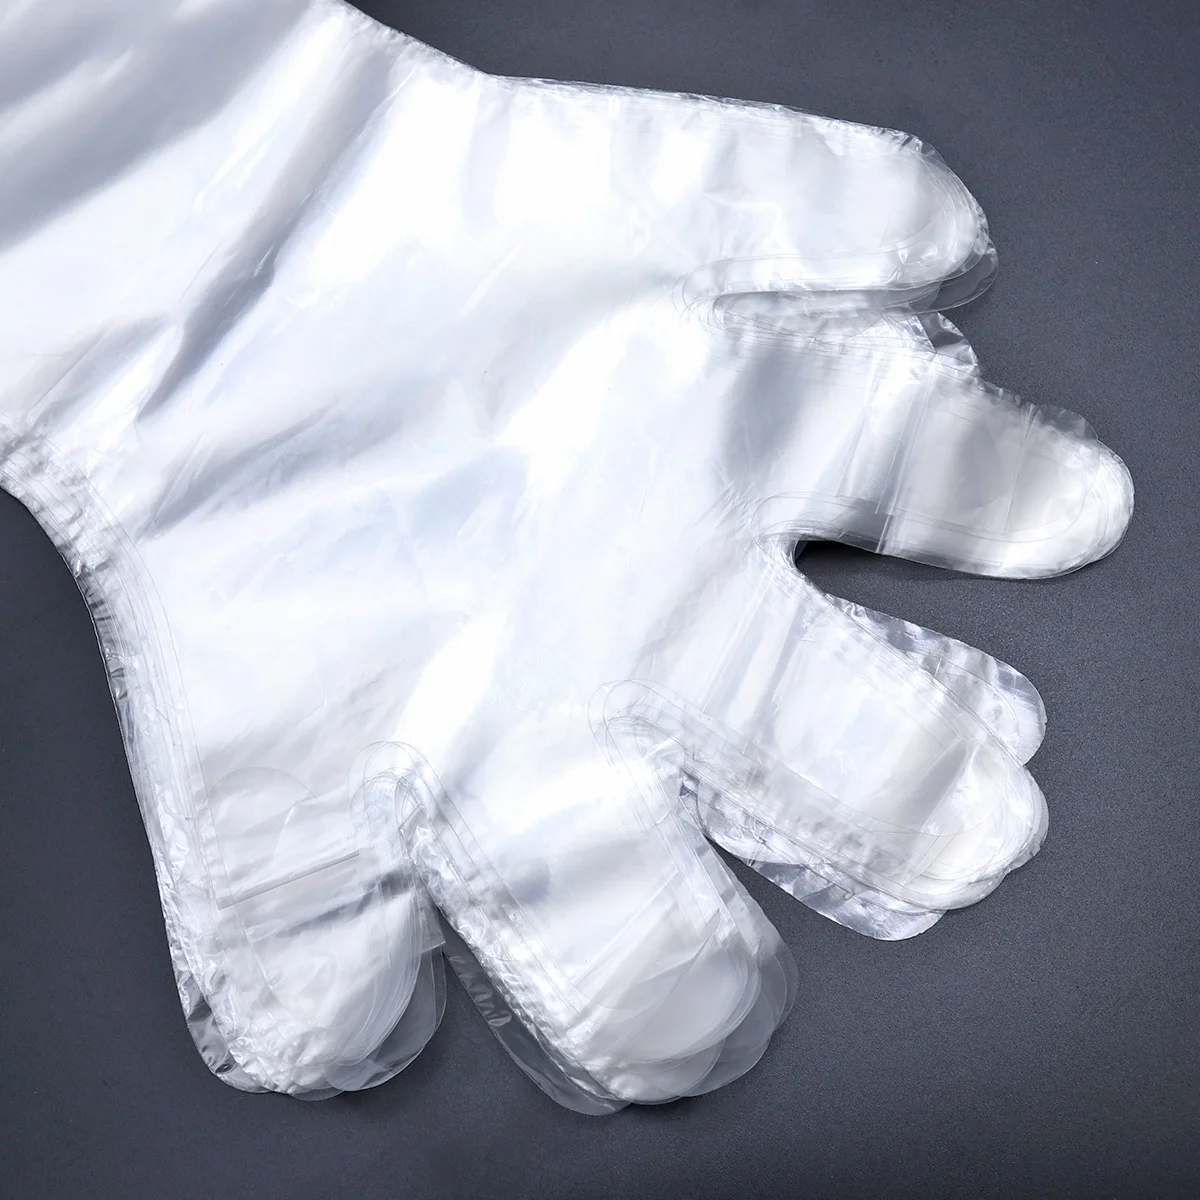 

50PCS Disposable Plastic Film Long Arm Glove Cattle Sheep Glove for Farm (White)